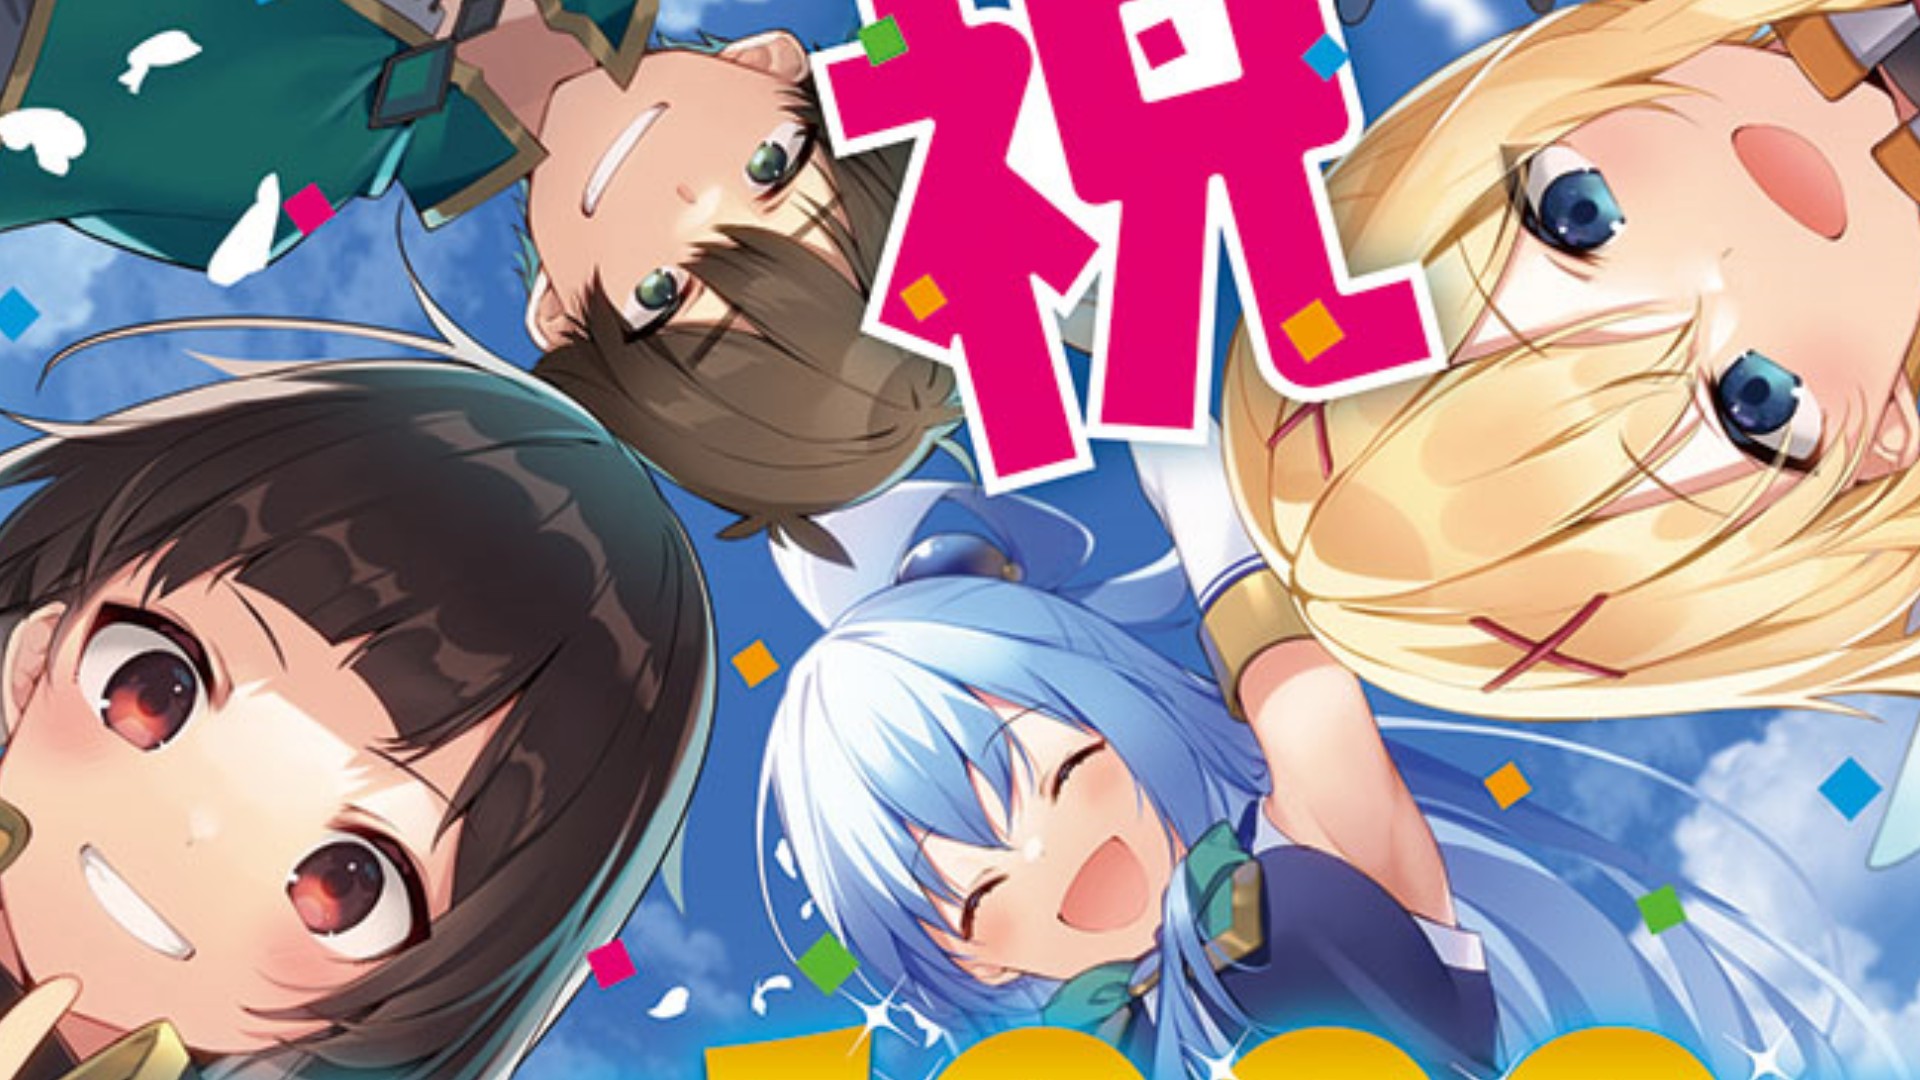 KonoSuba season 3 anime: Release date, story, characters, seiyuu, manga